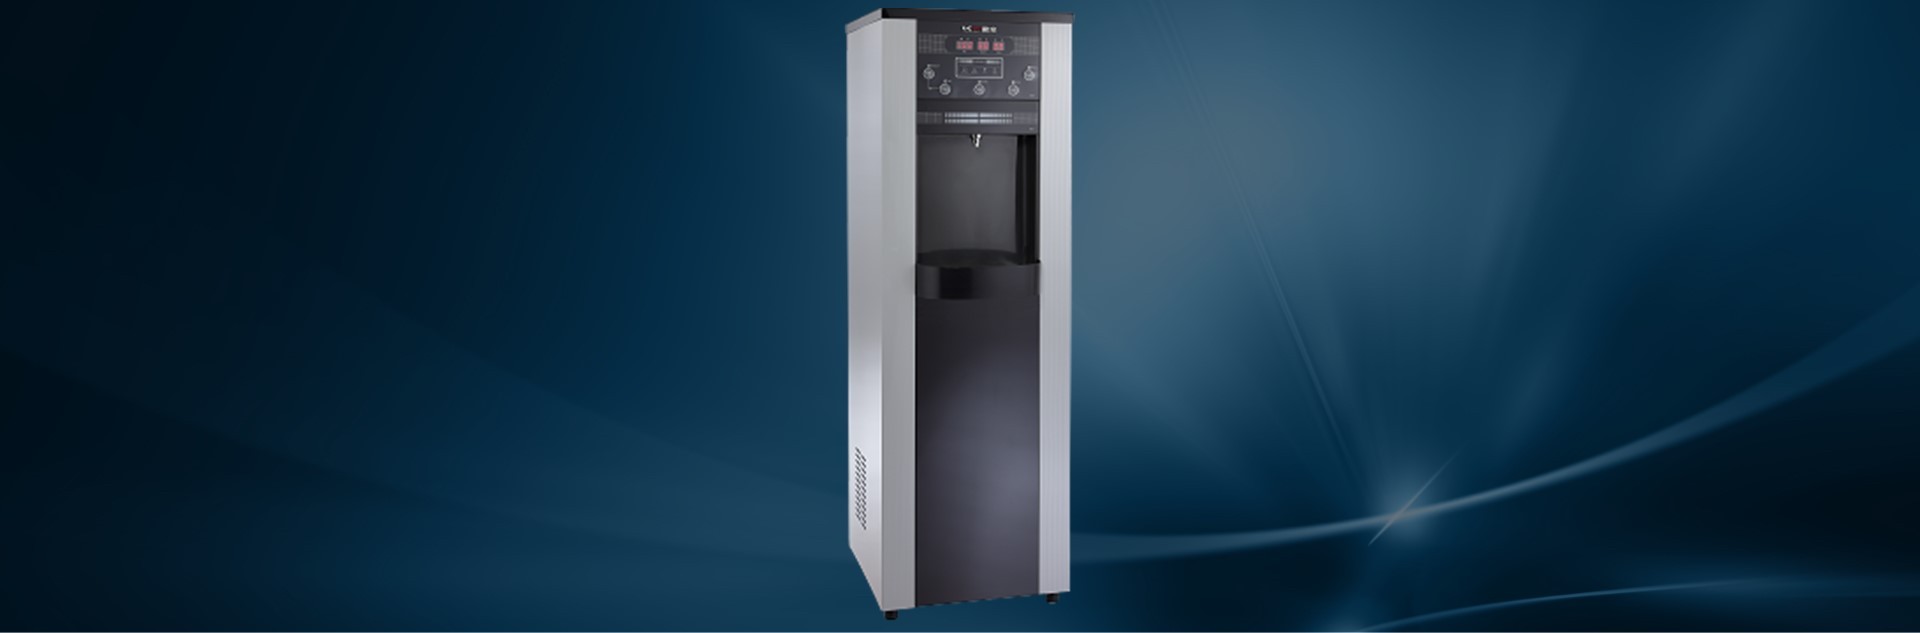 LC-2011系列程控高溫殺菌型飲水機